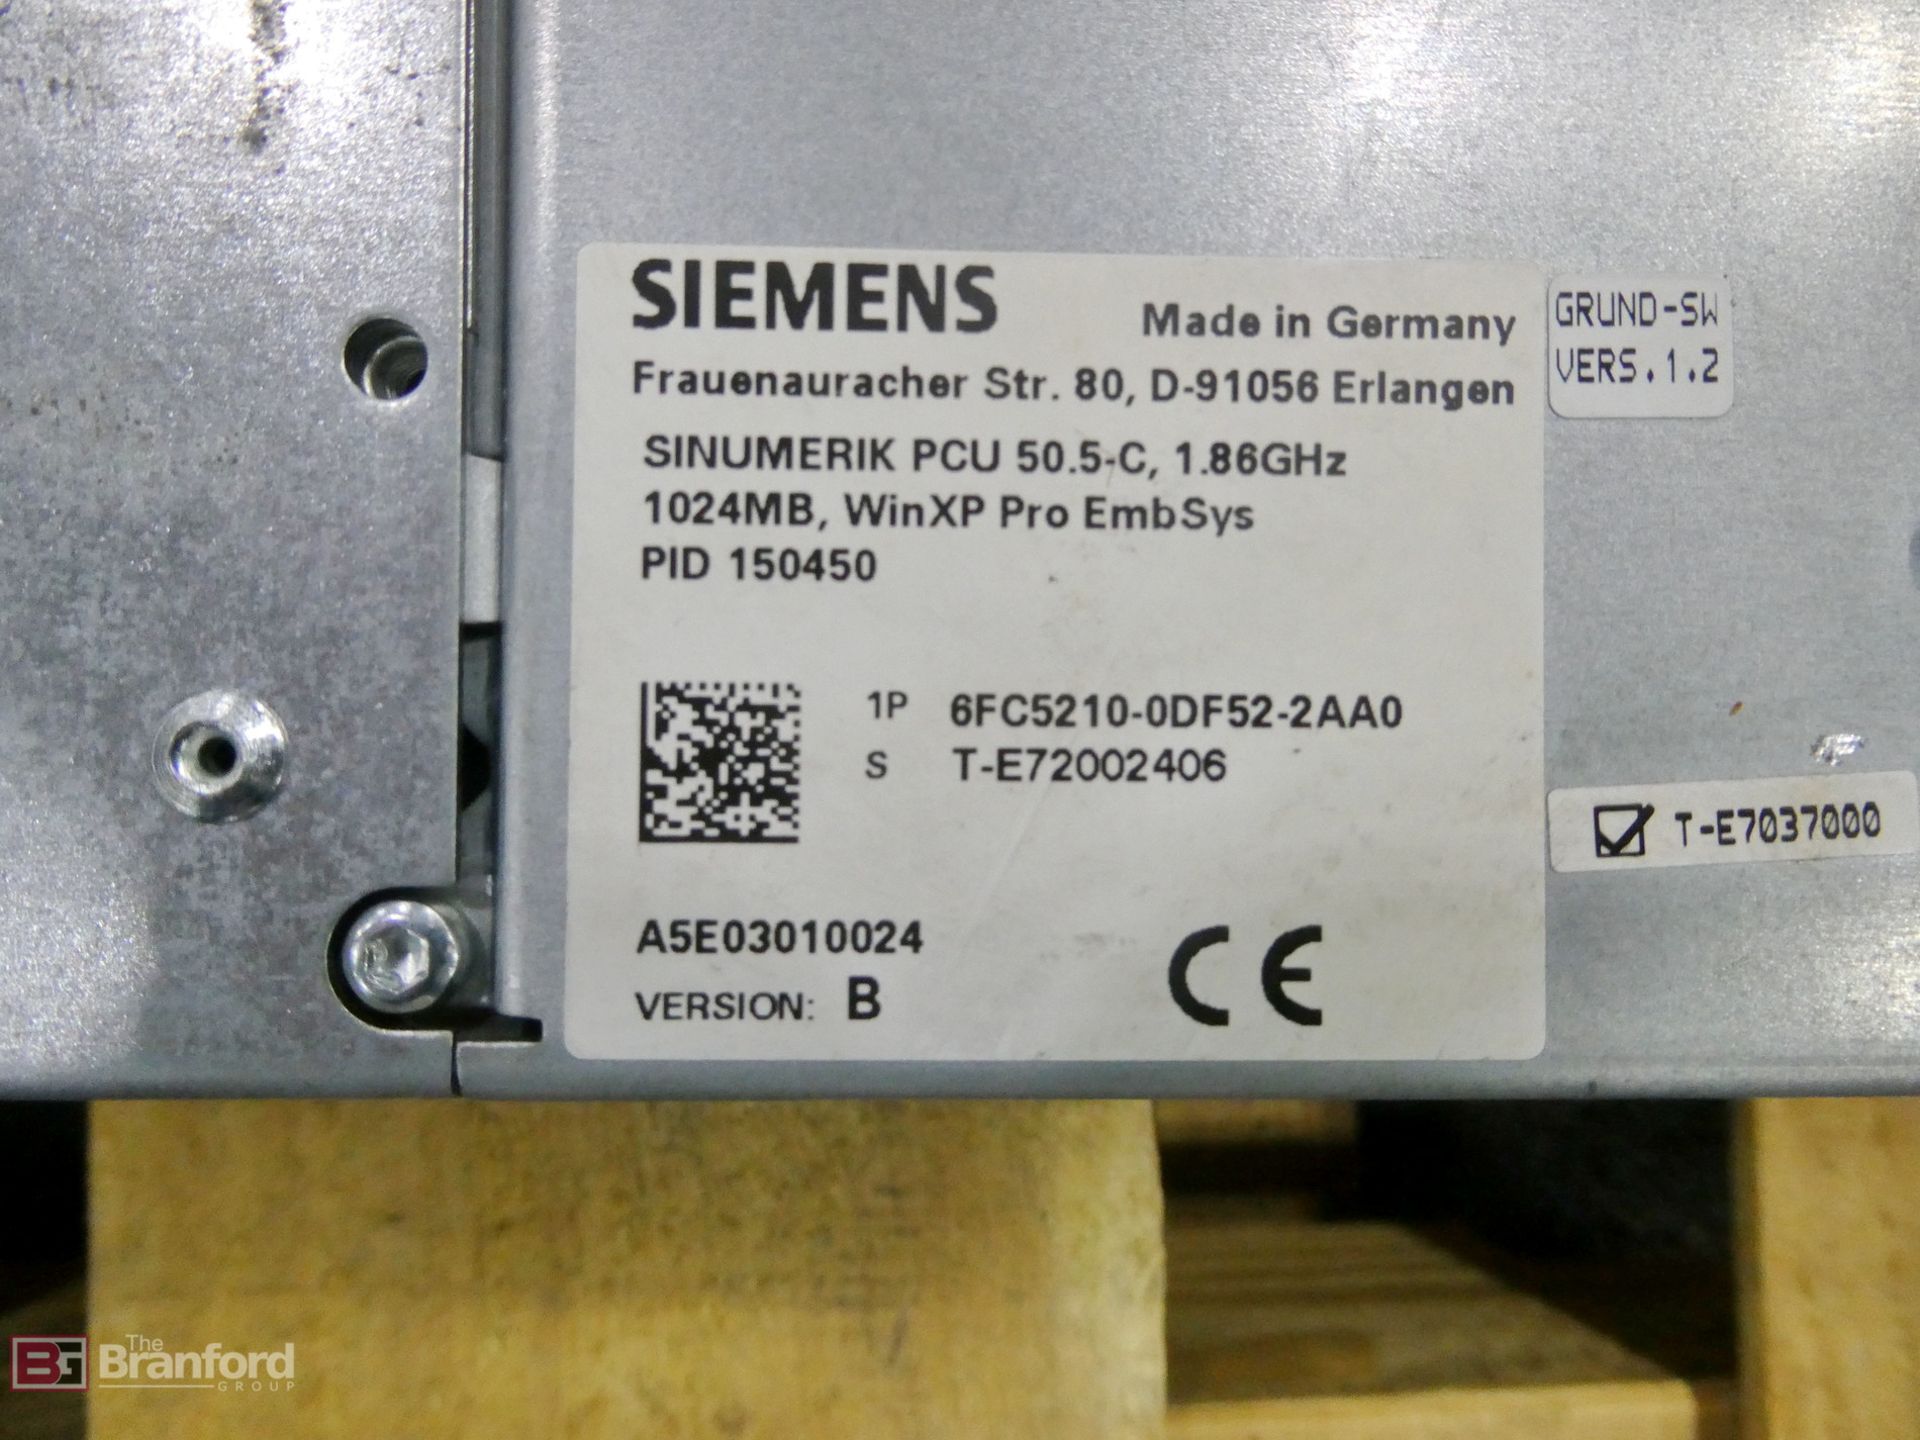 Siemens Sinumerik 6FC5210-ODF52-2AAO, PCU 50.5-C - Image 3 of 3